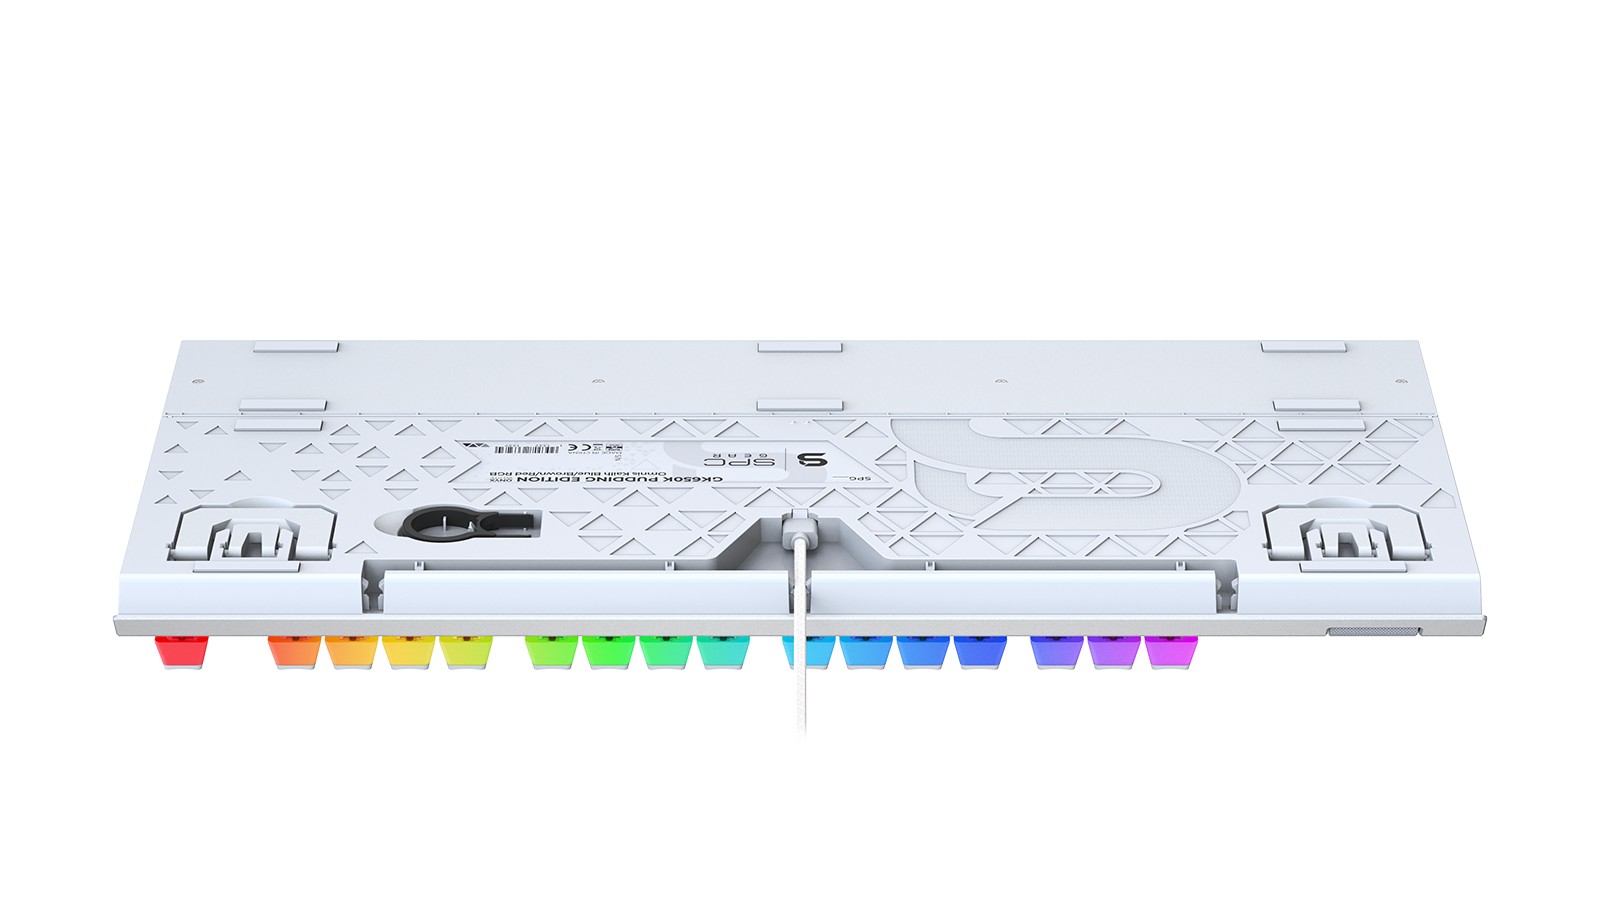 SPC Gear GK650K Omnis mehāniskā klaviatūra ar RGB Pudding Edition (US, Kailh BLUE switch)